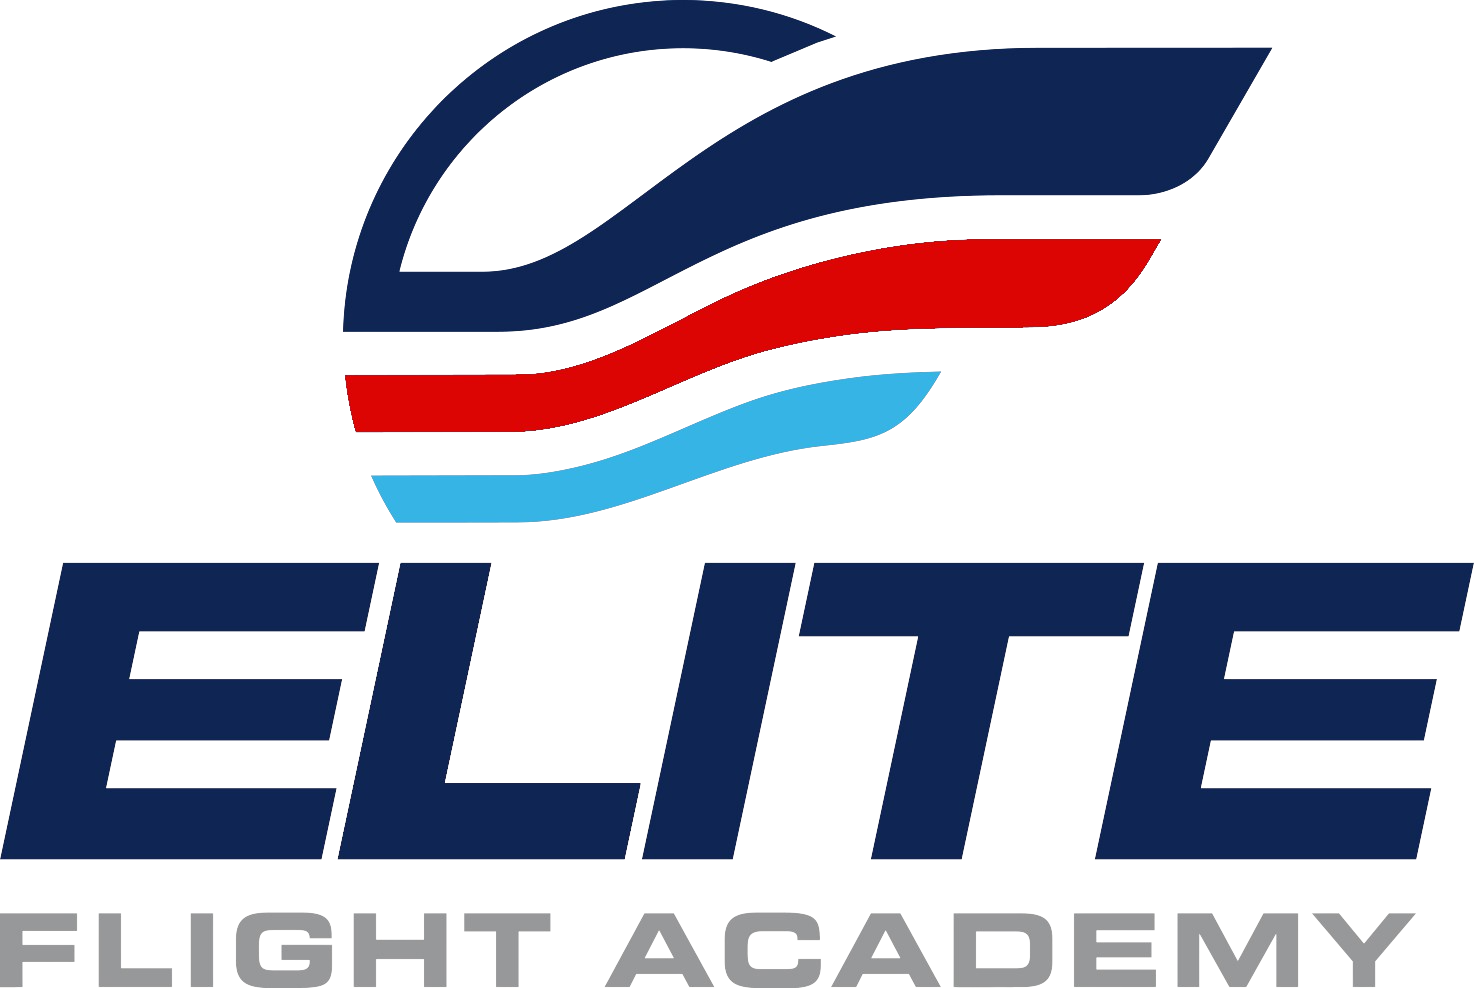 Elite Flight Academy